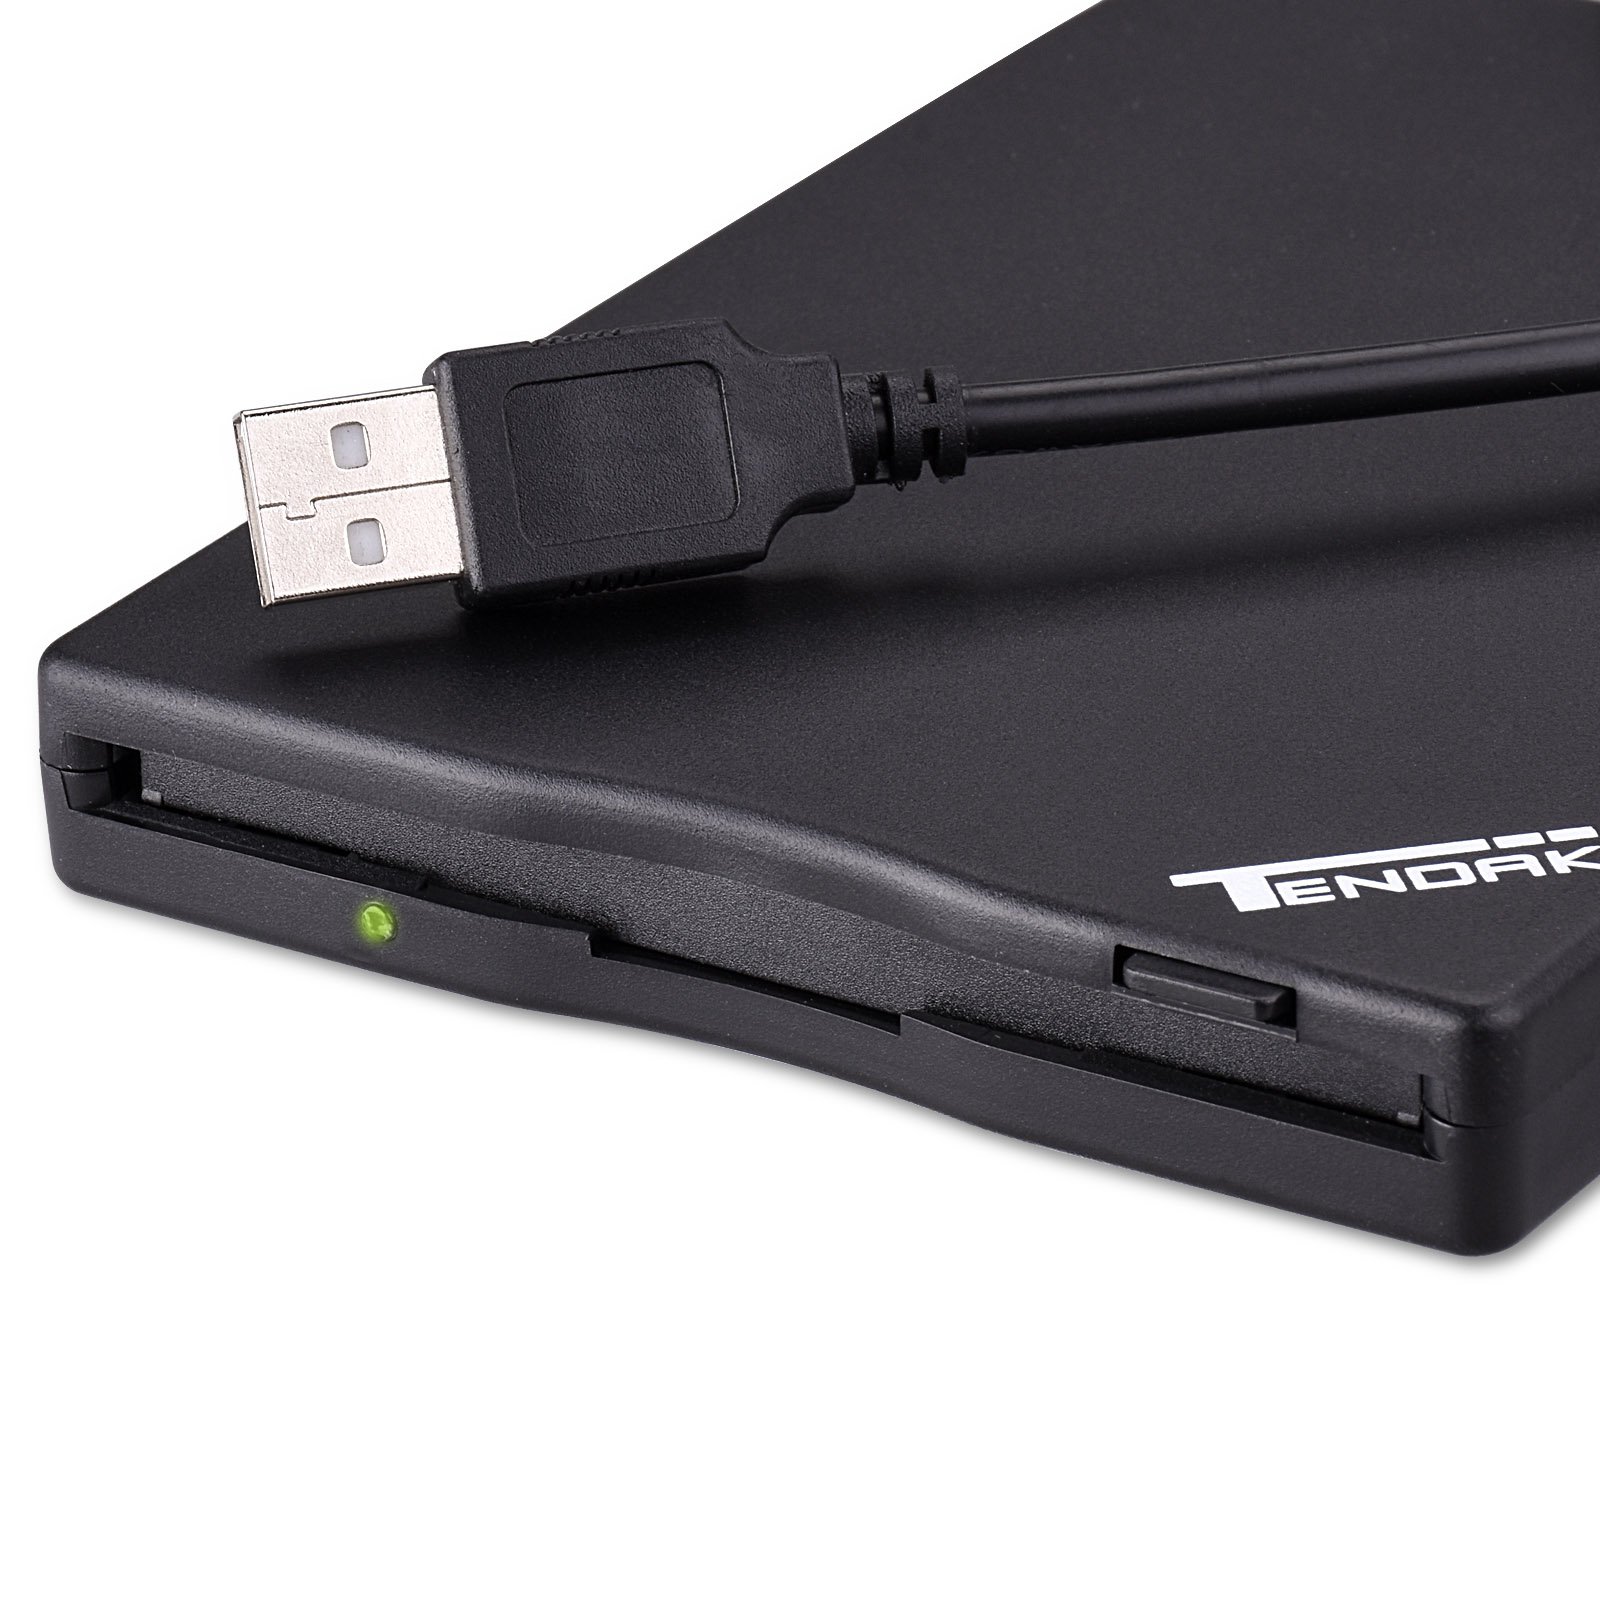 Tendak USB Floppy Disk Drive - 3.5